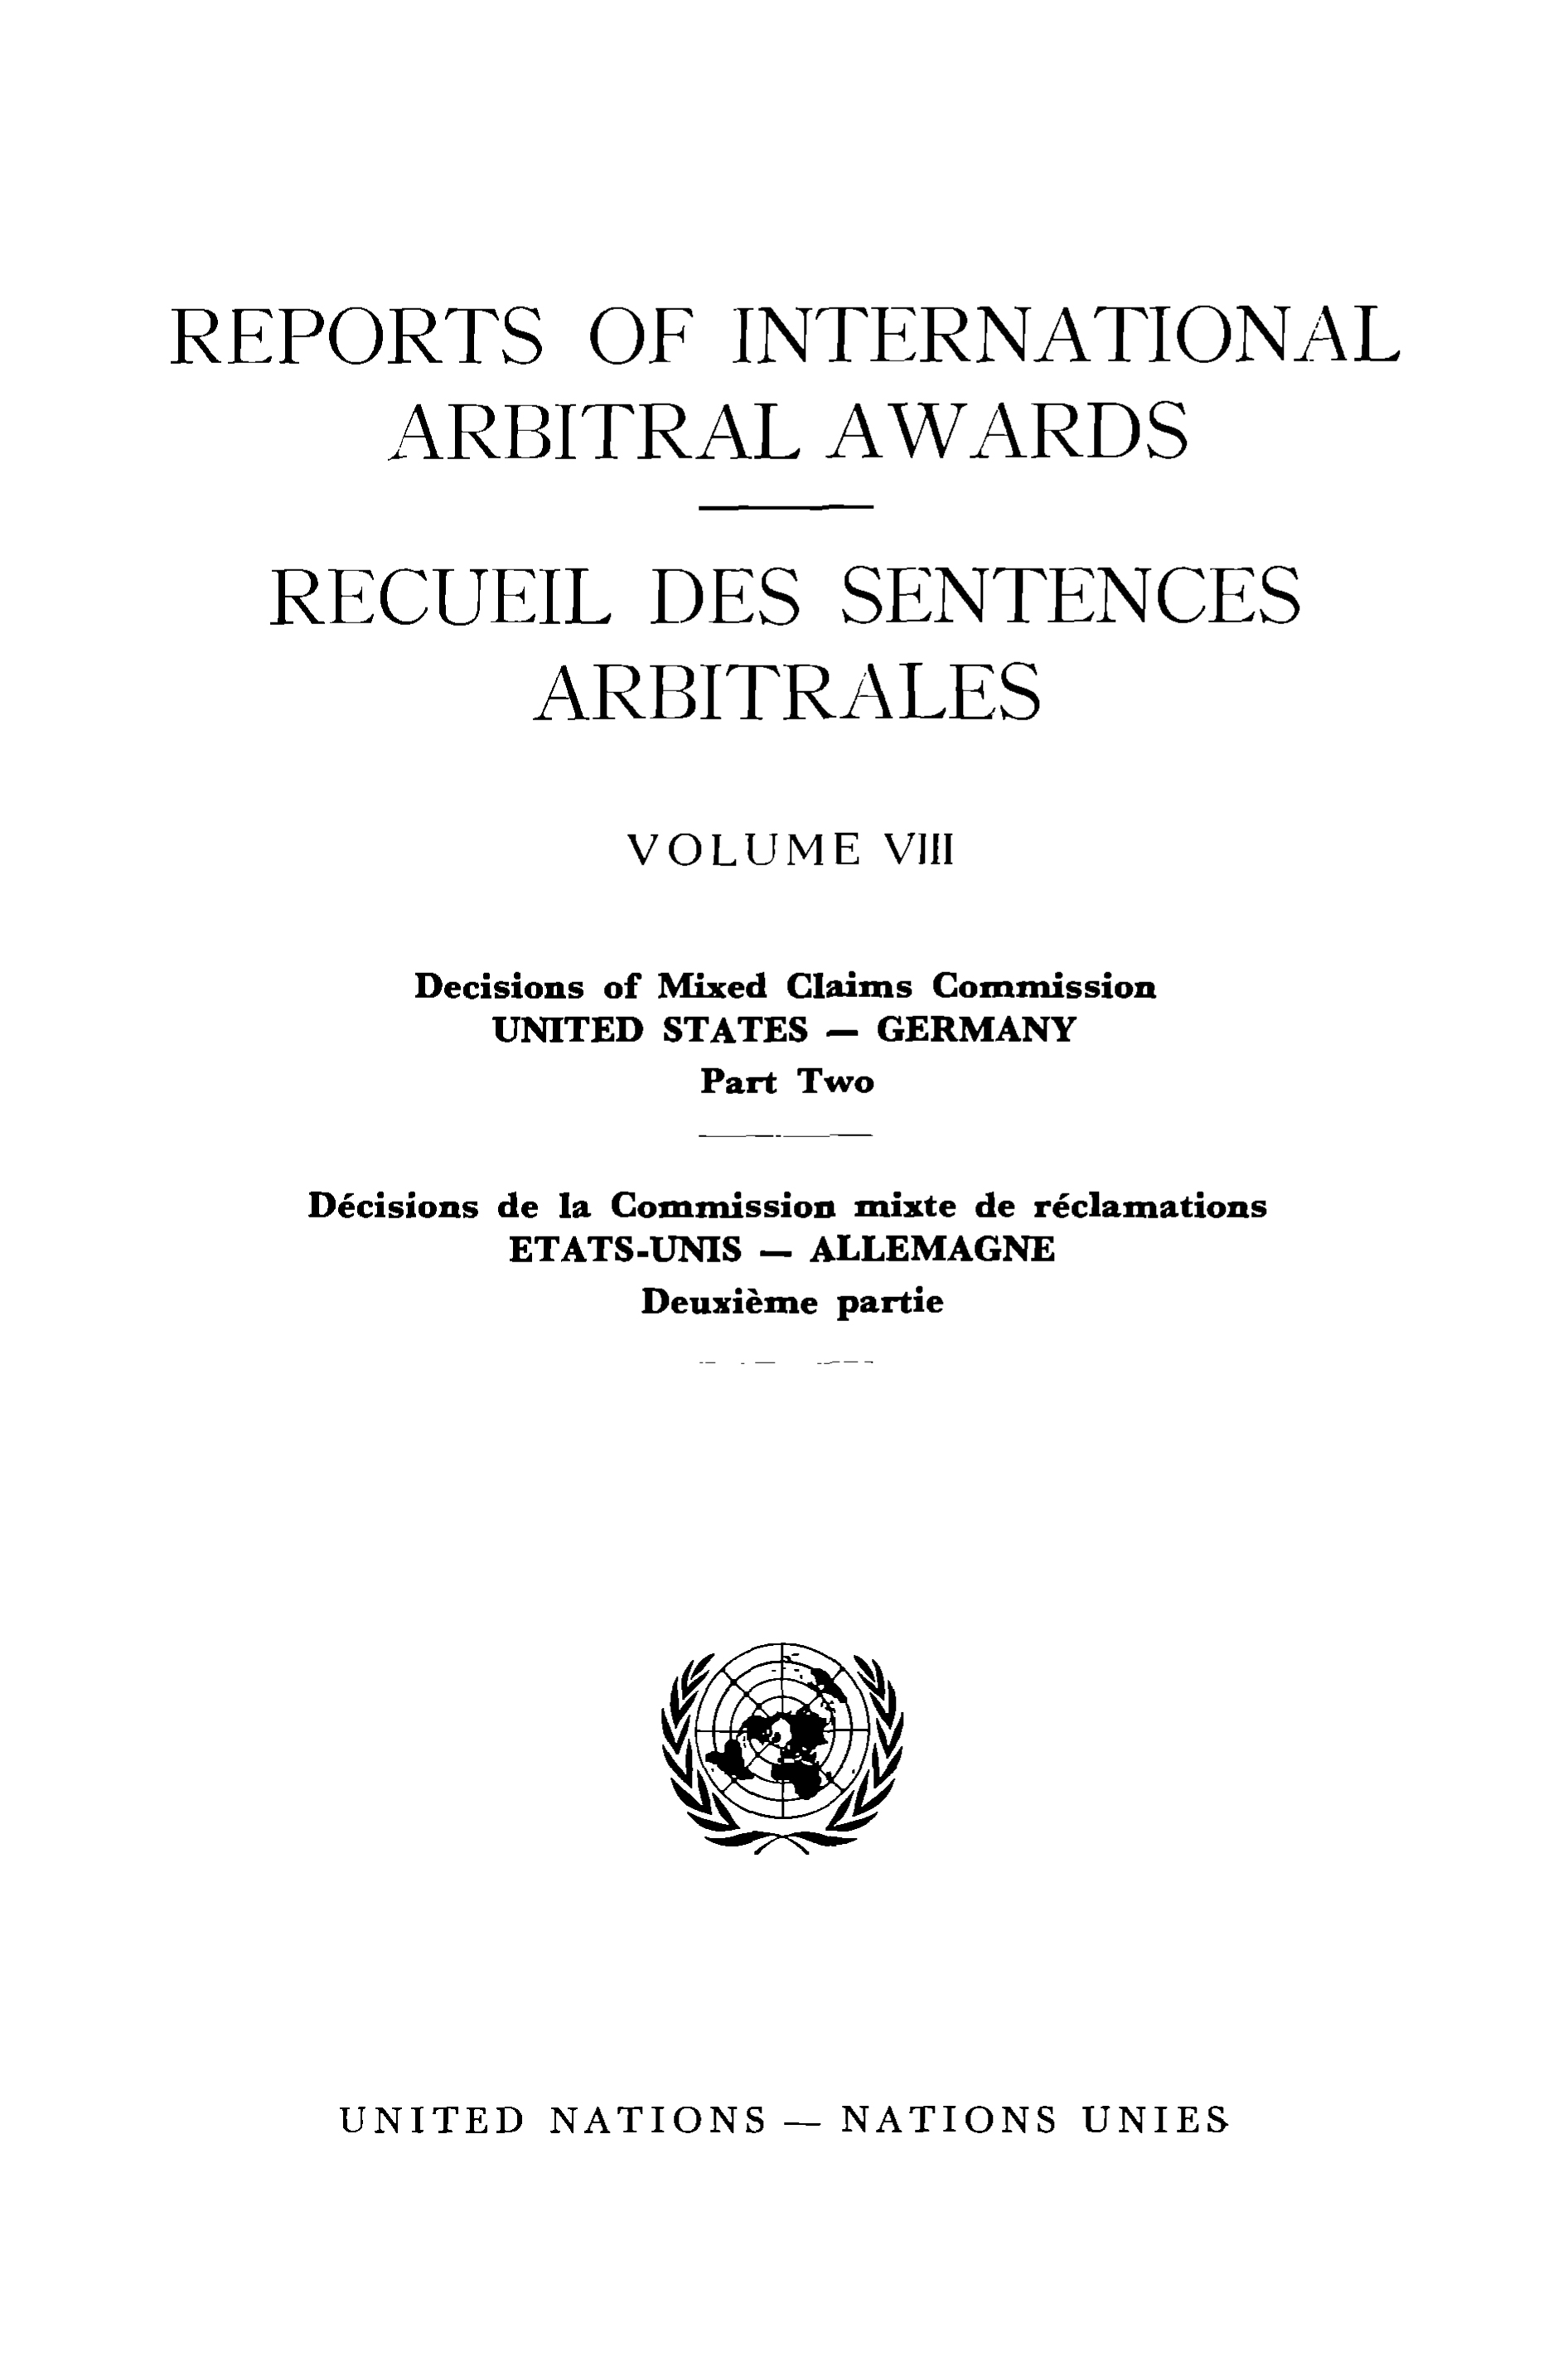 image of Reports of International Arbitral Awards, Vol. VIII